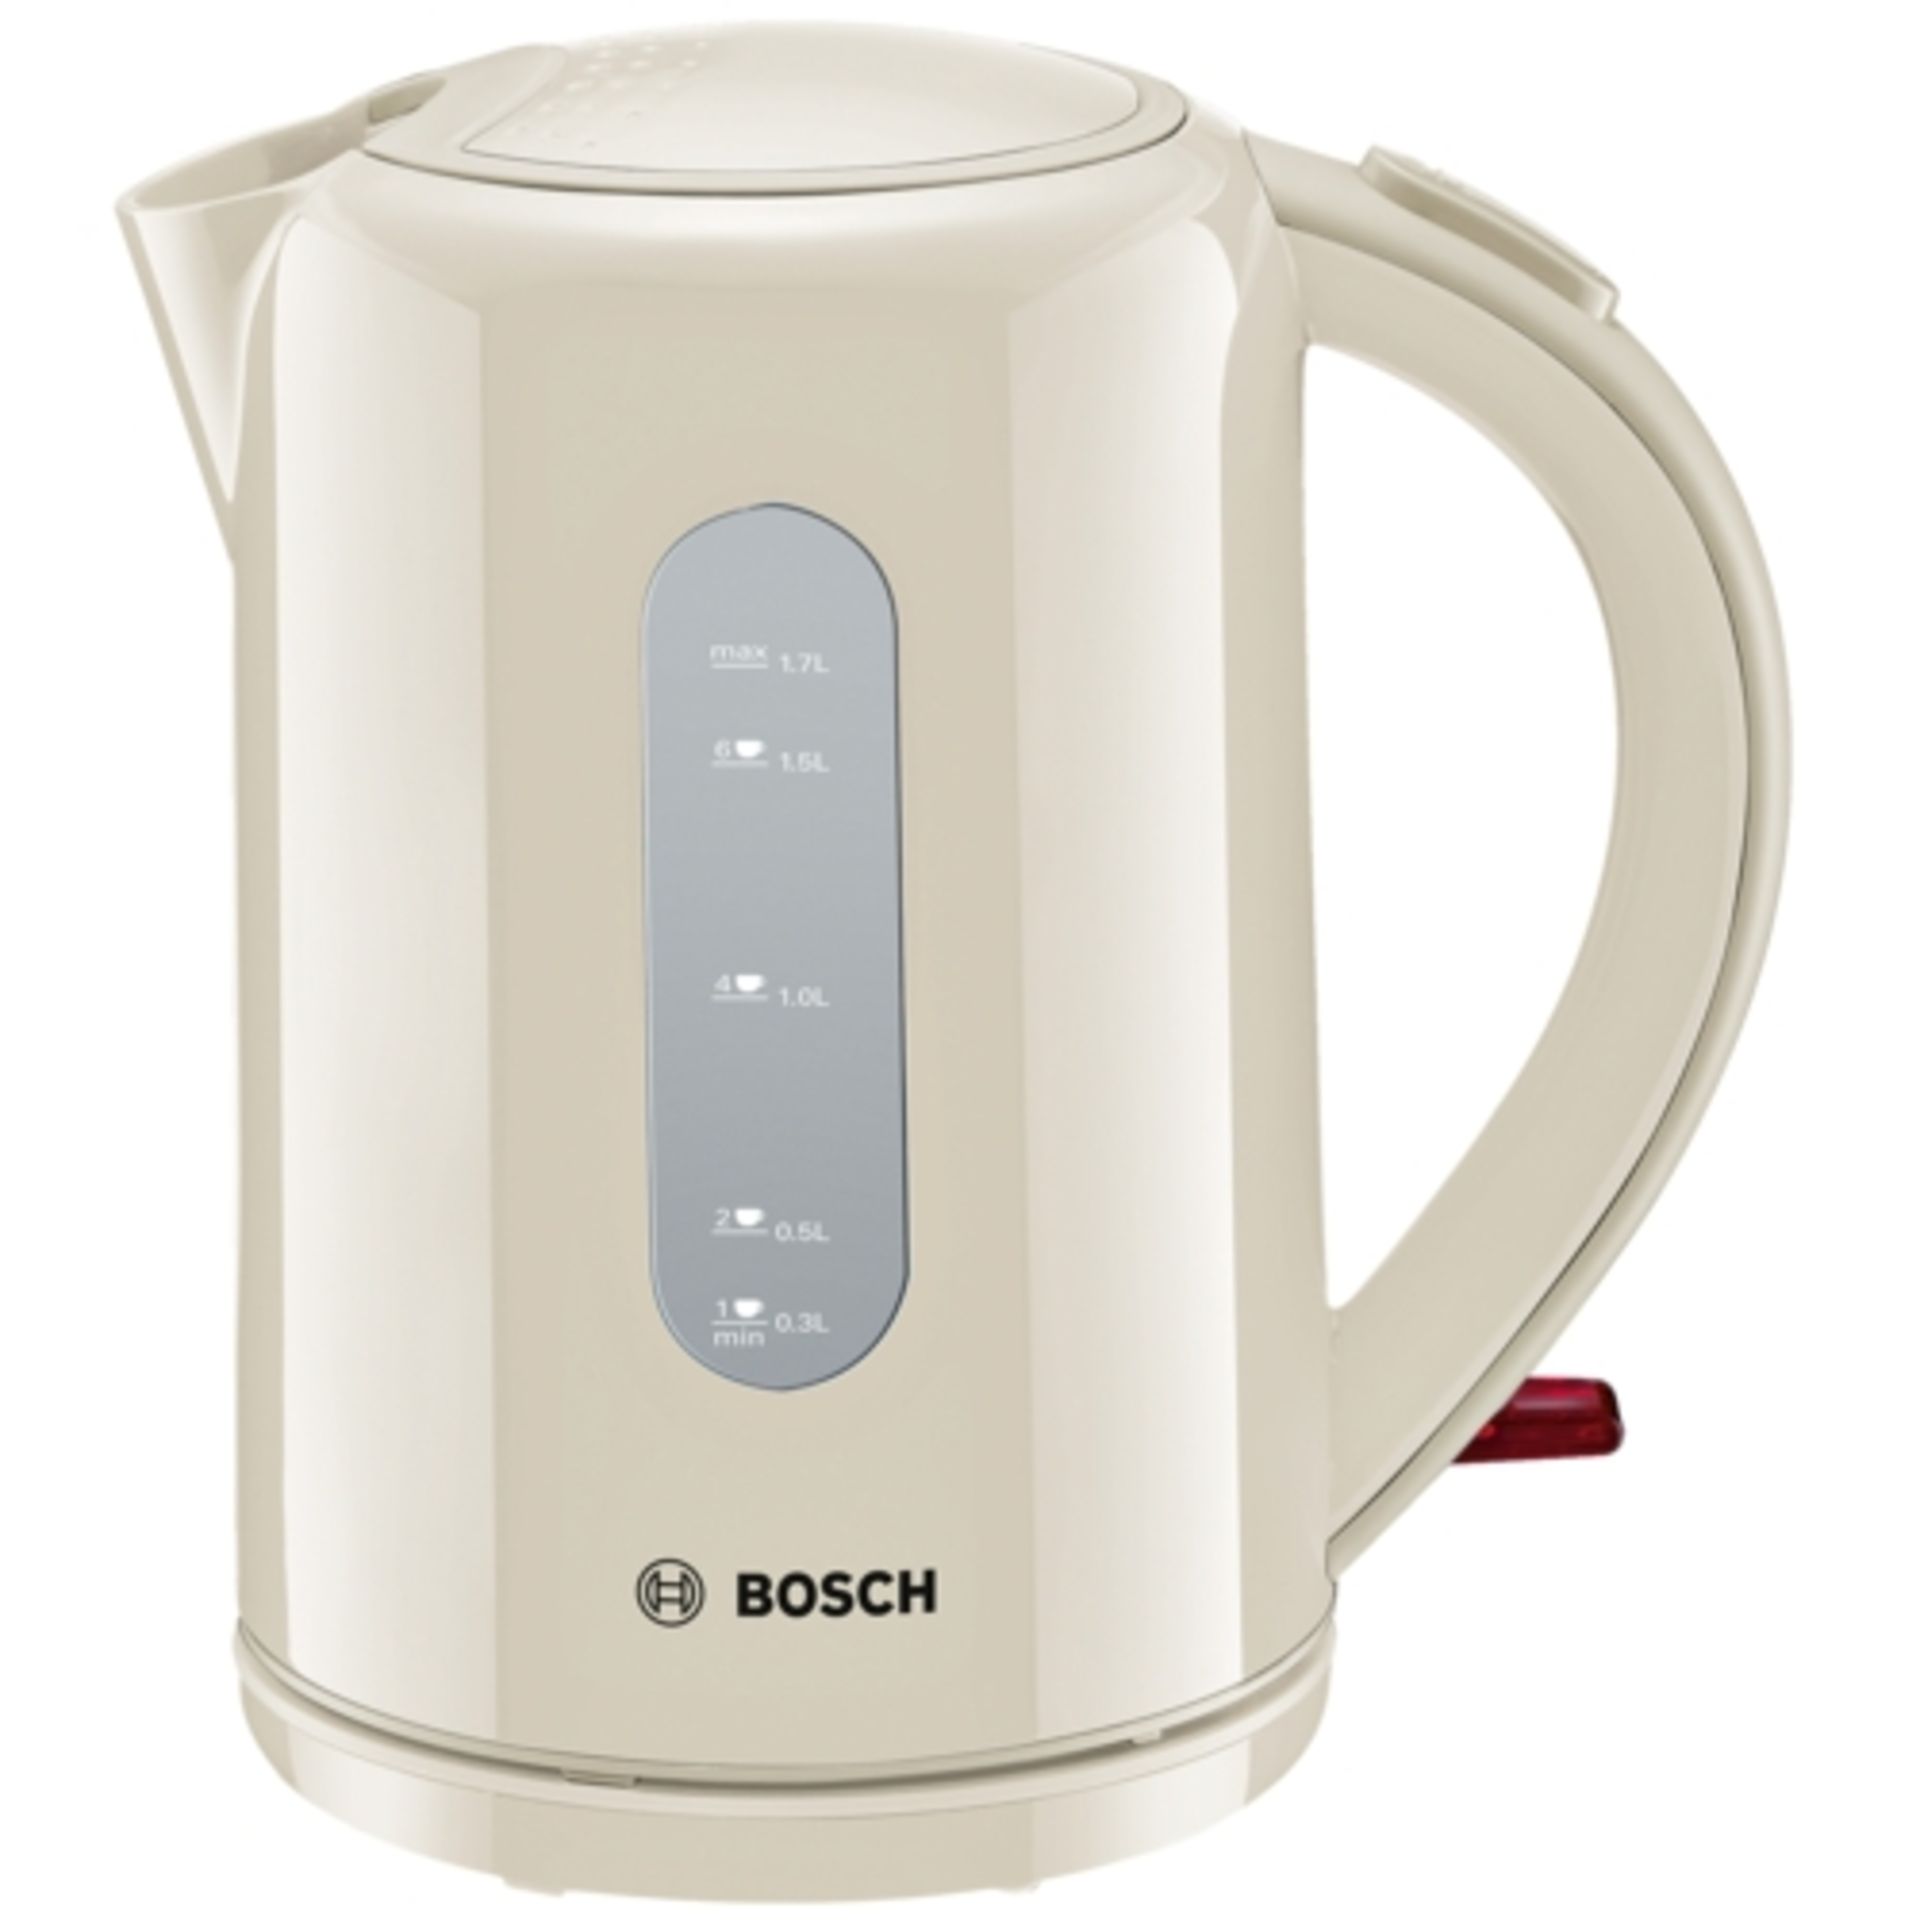 V Brand New Bosch 1.7l Cordless Electric Kettle 3000W (Cream & Beige) ISP £29.45